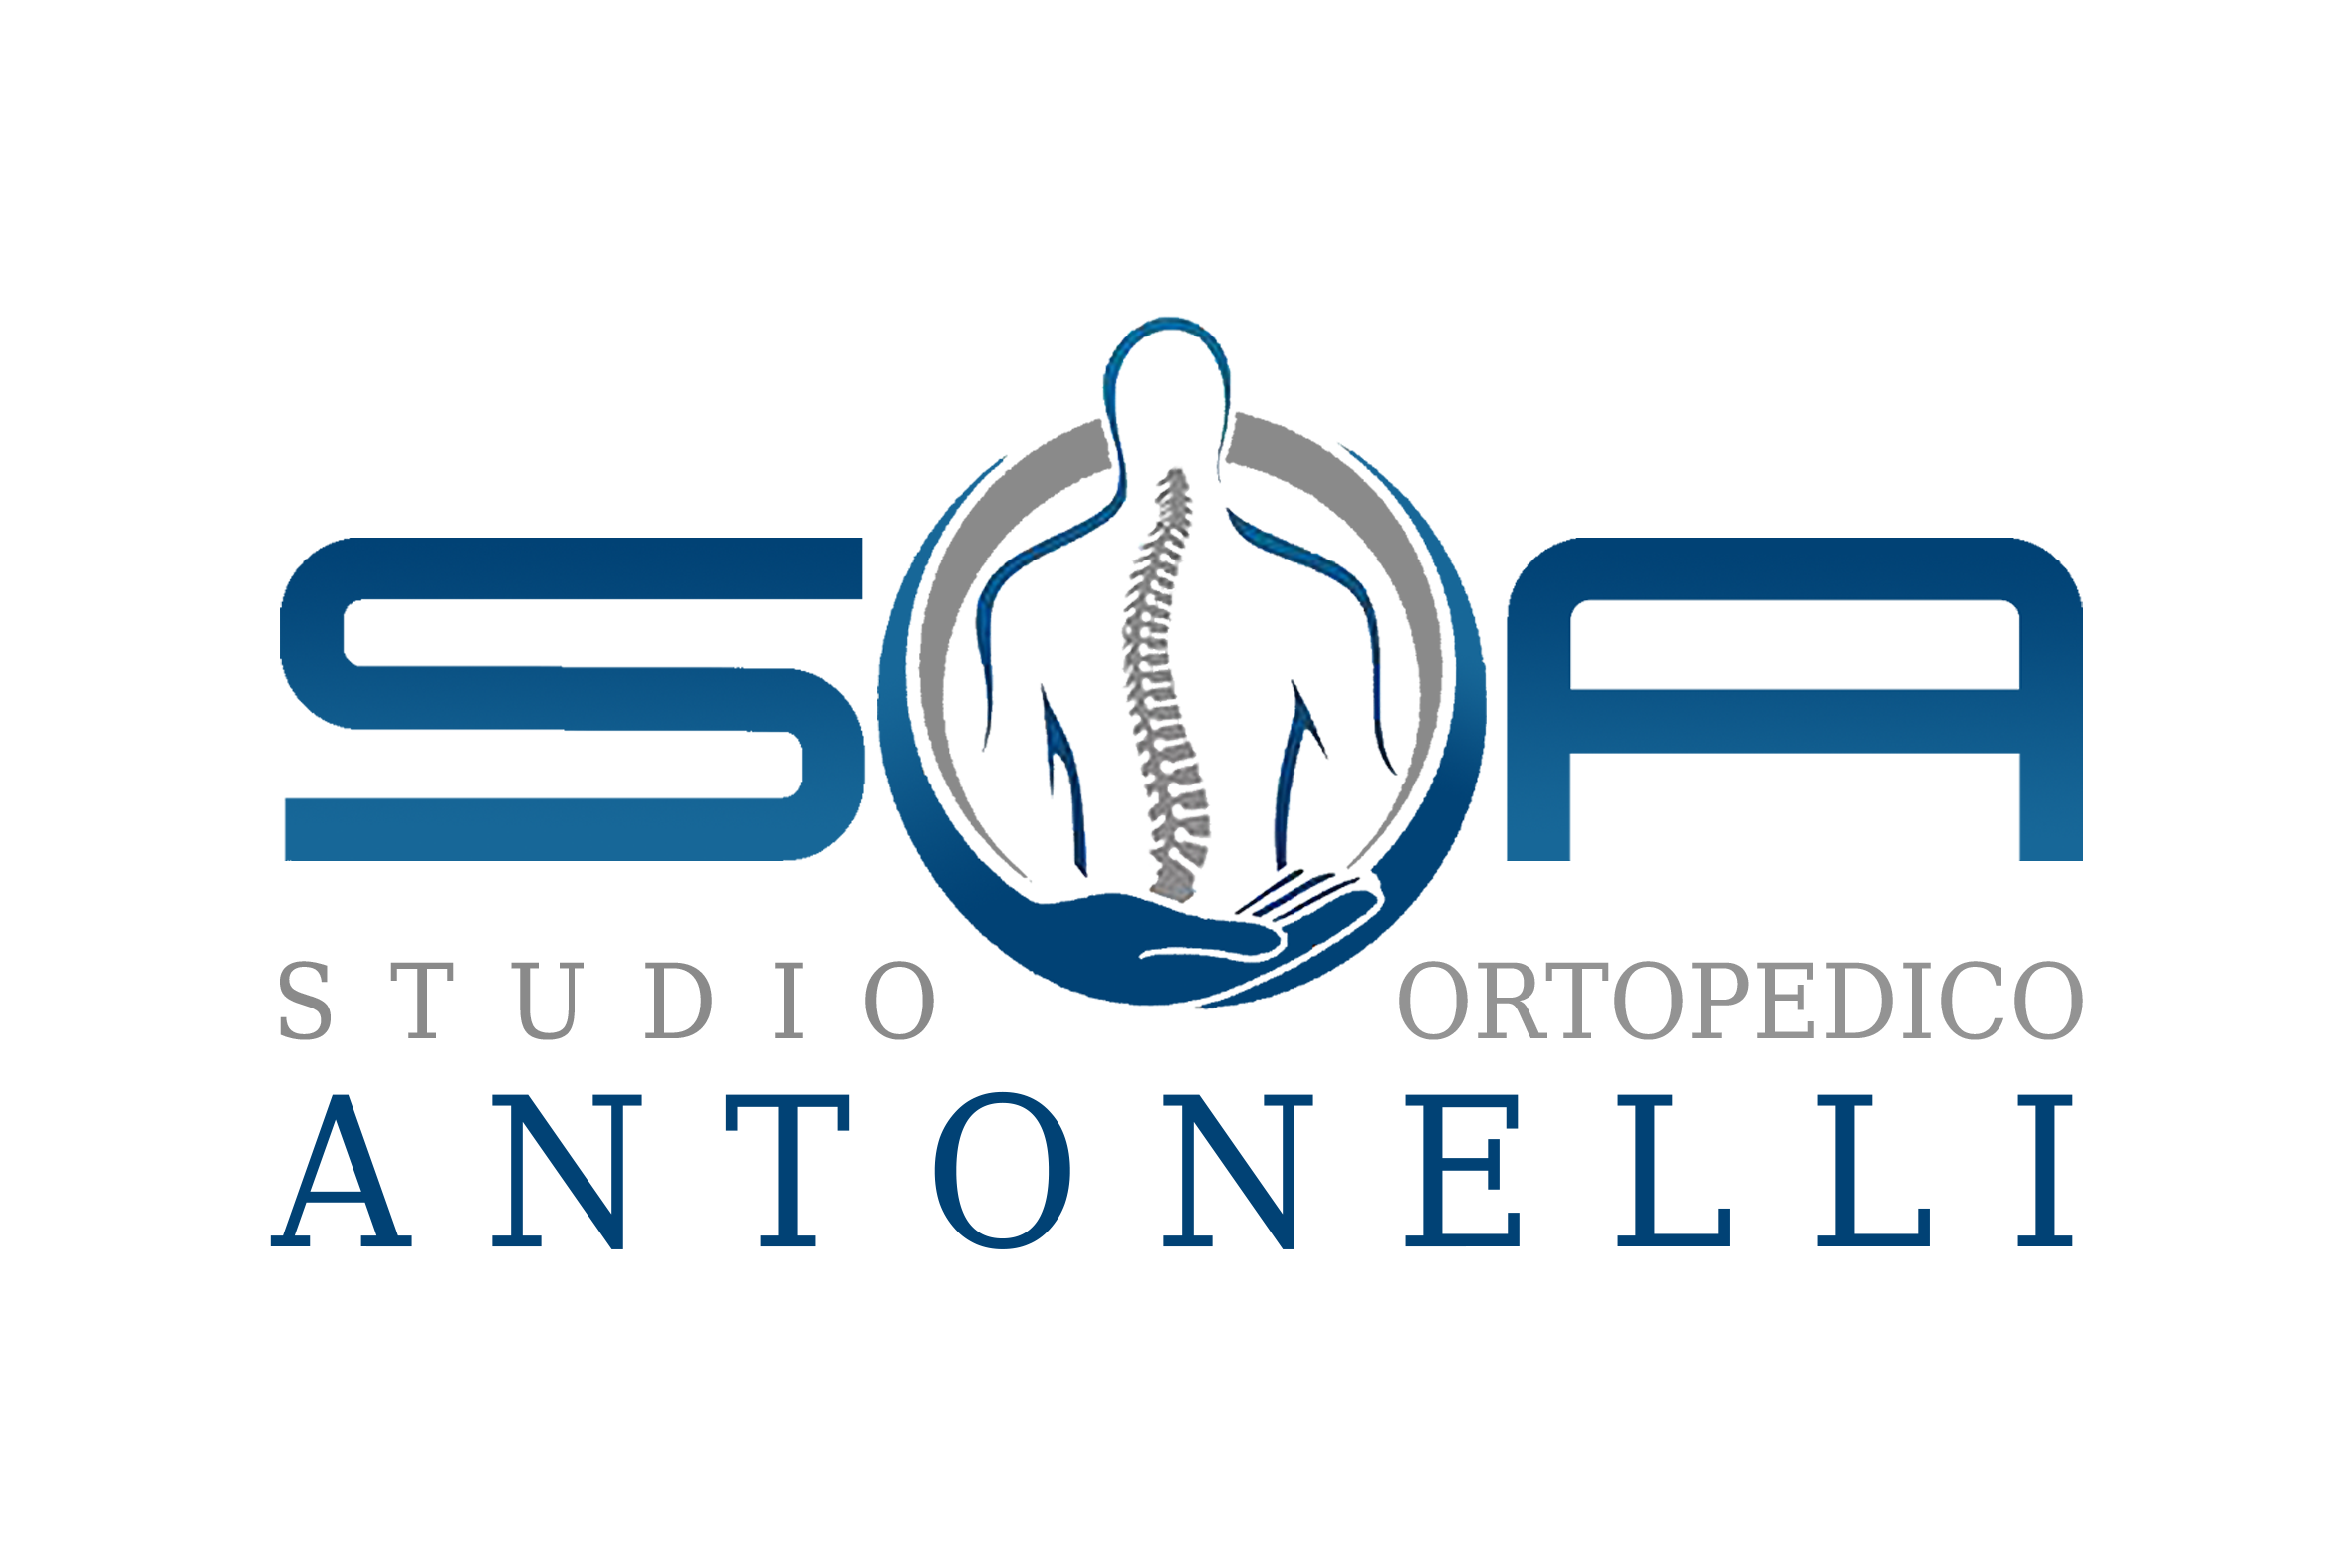 Studio ortopedico Antonelli